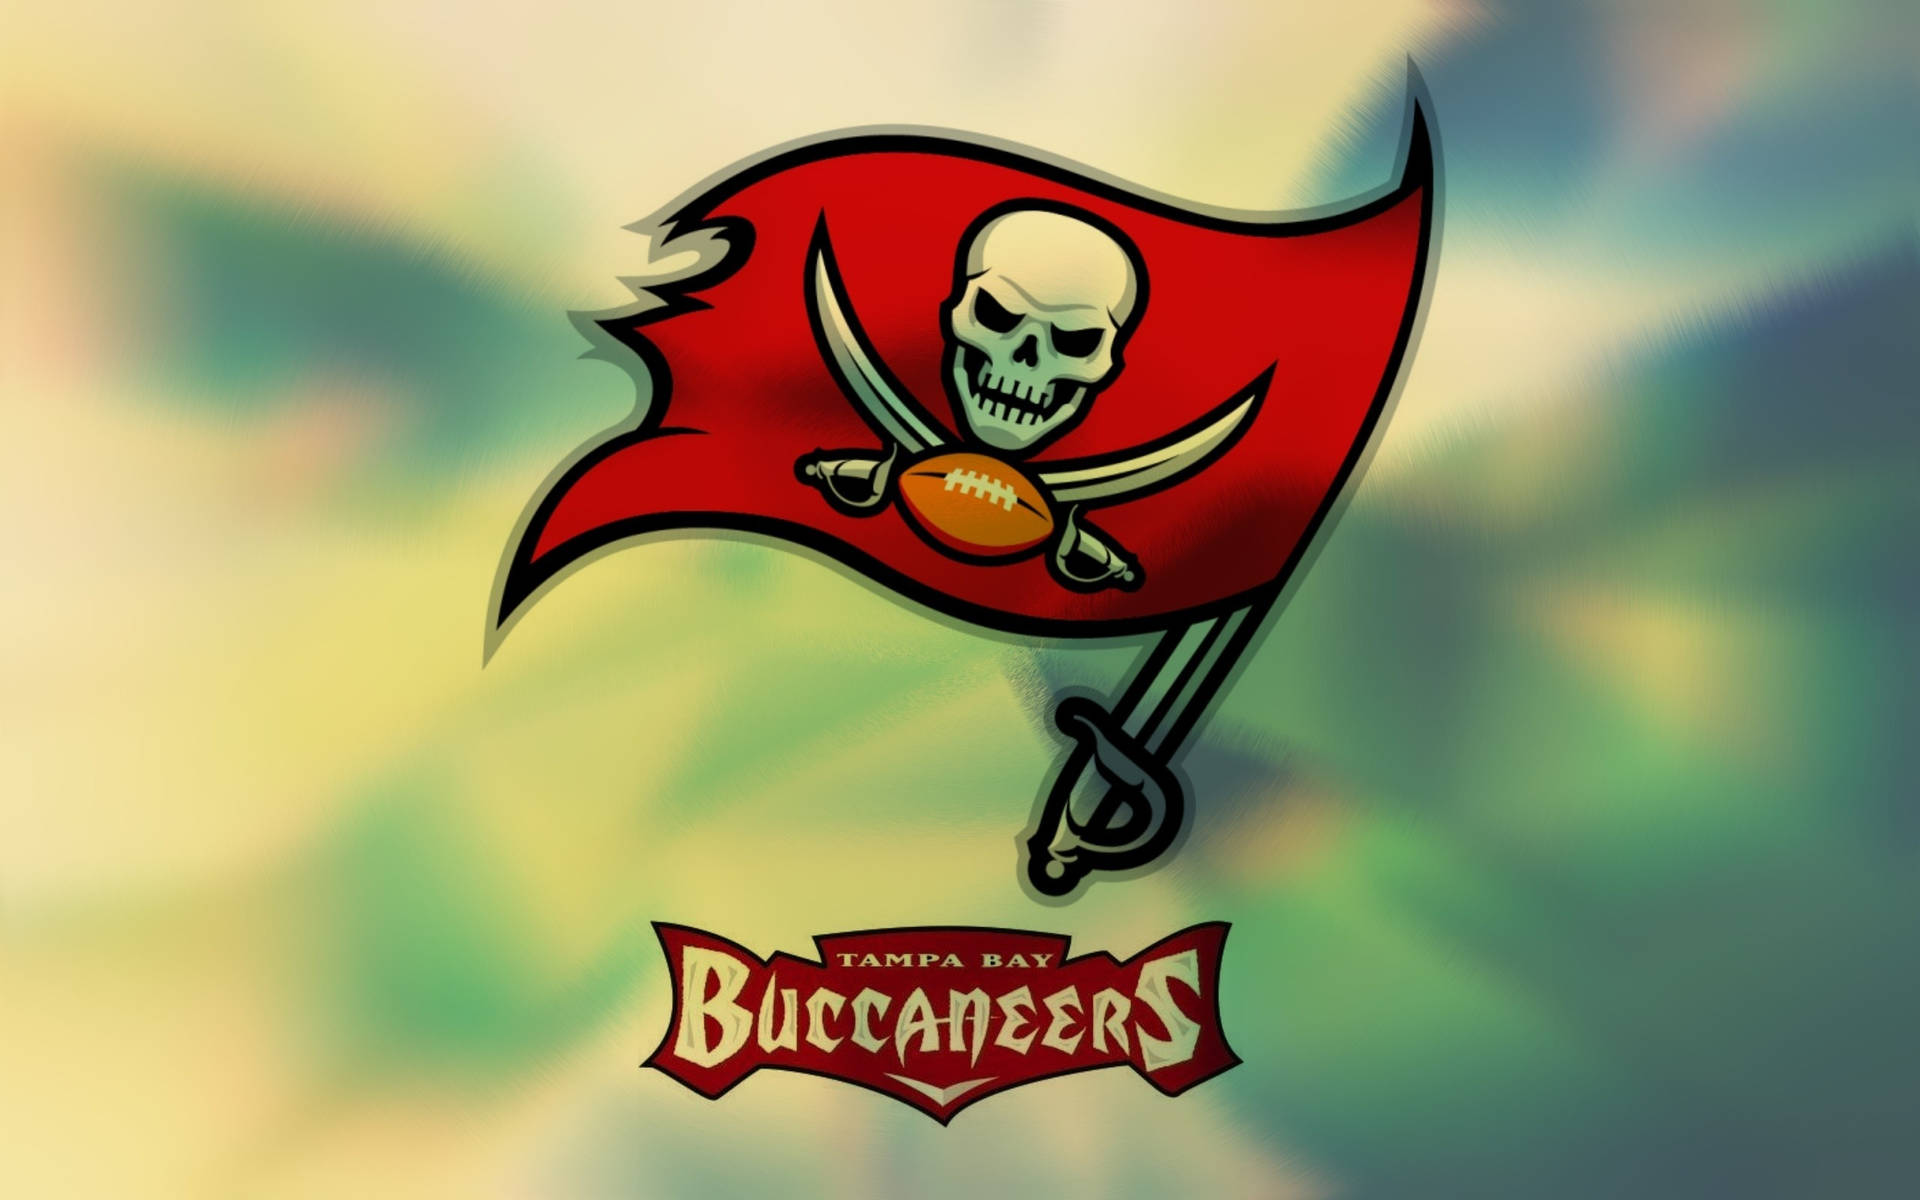 Tampa Bay Buccaneers Cartoon Poster Background